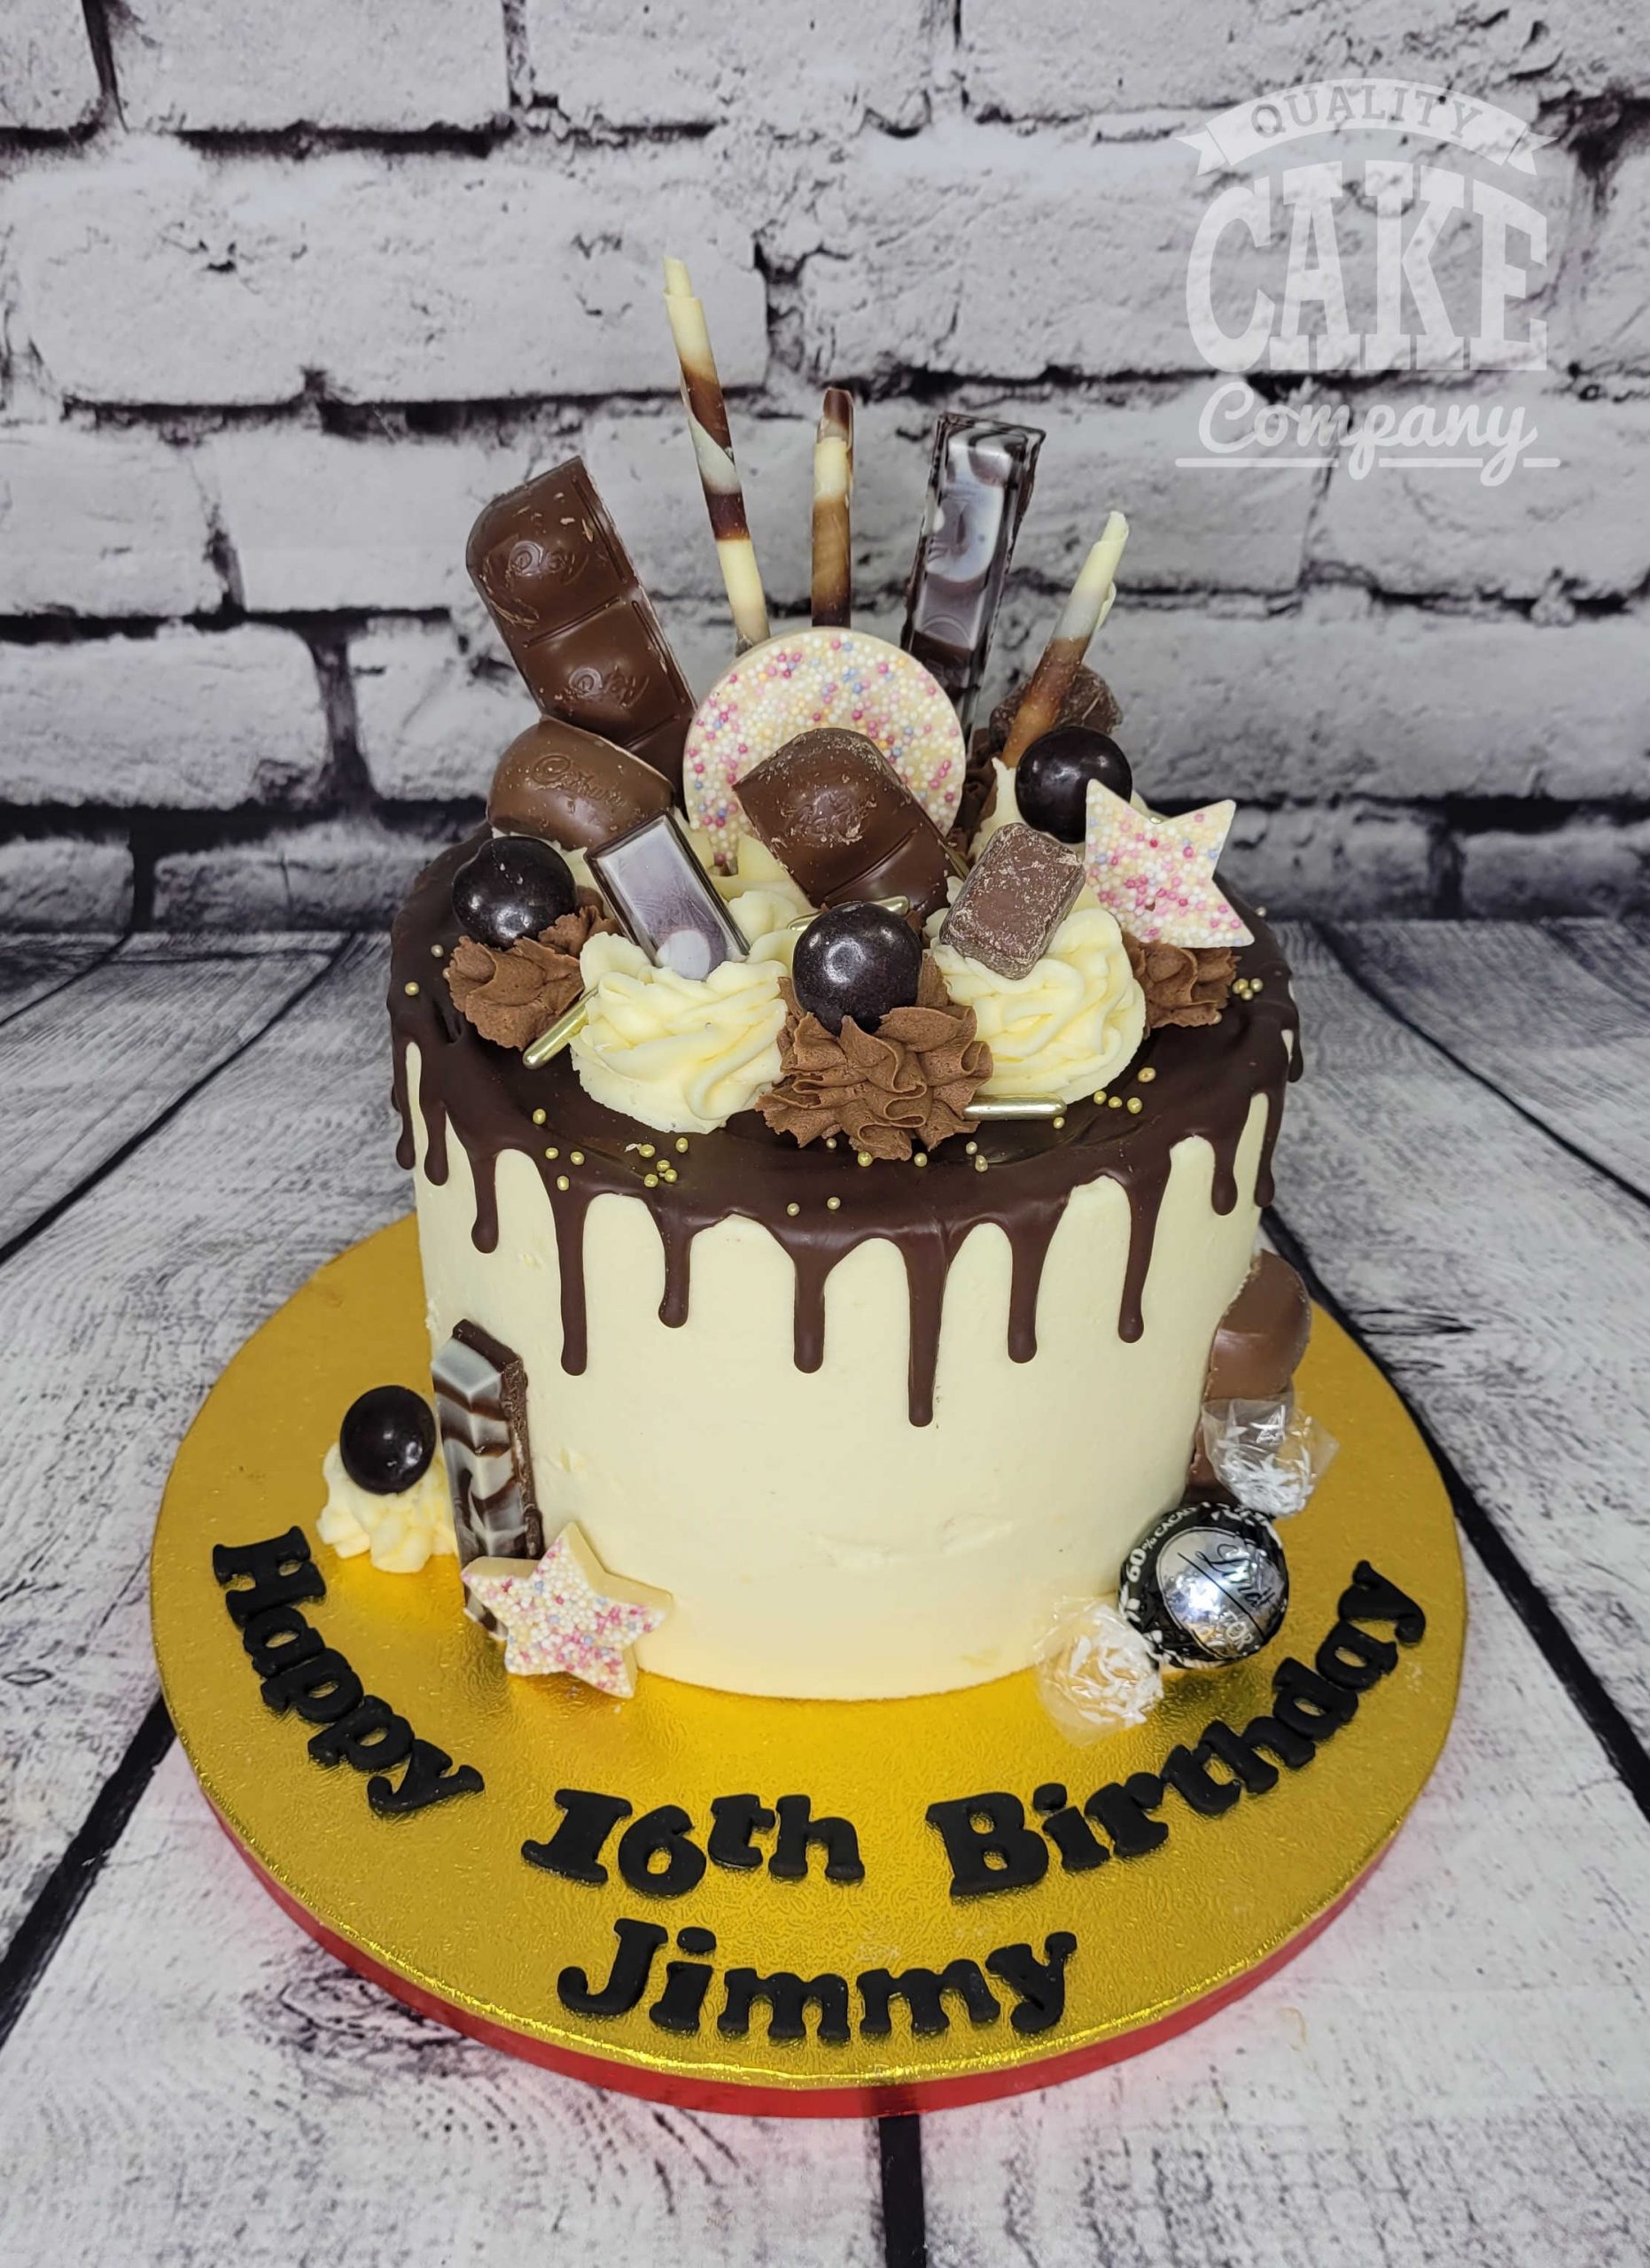 16th Birthday Cakes - Quality Cake Company Tamworth